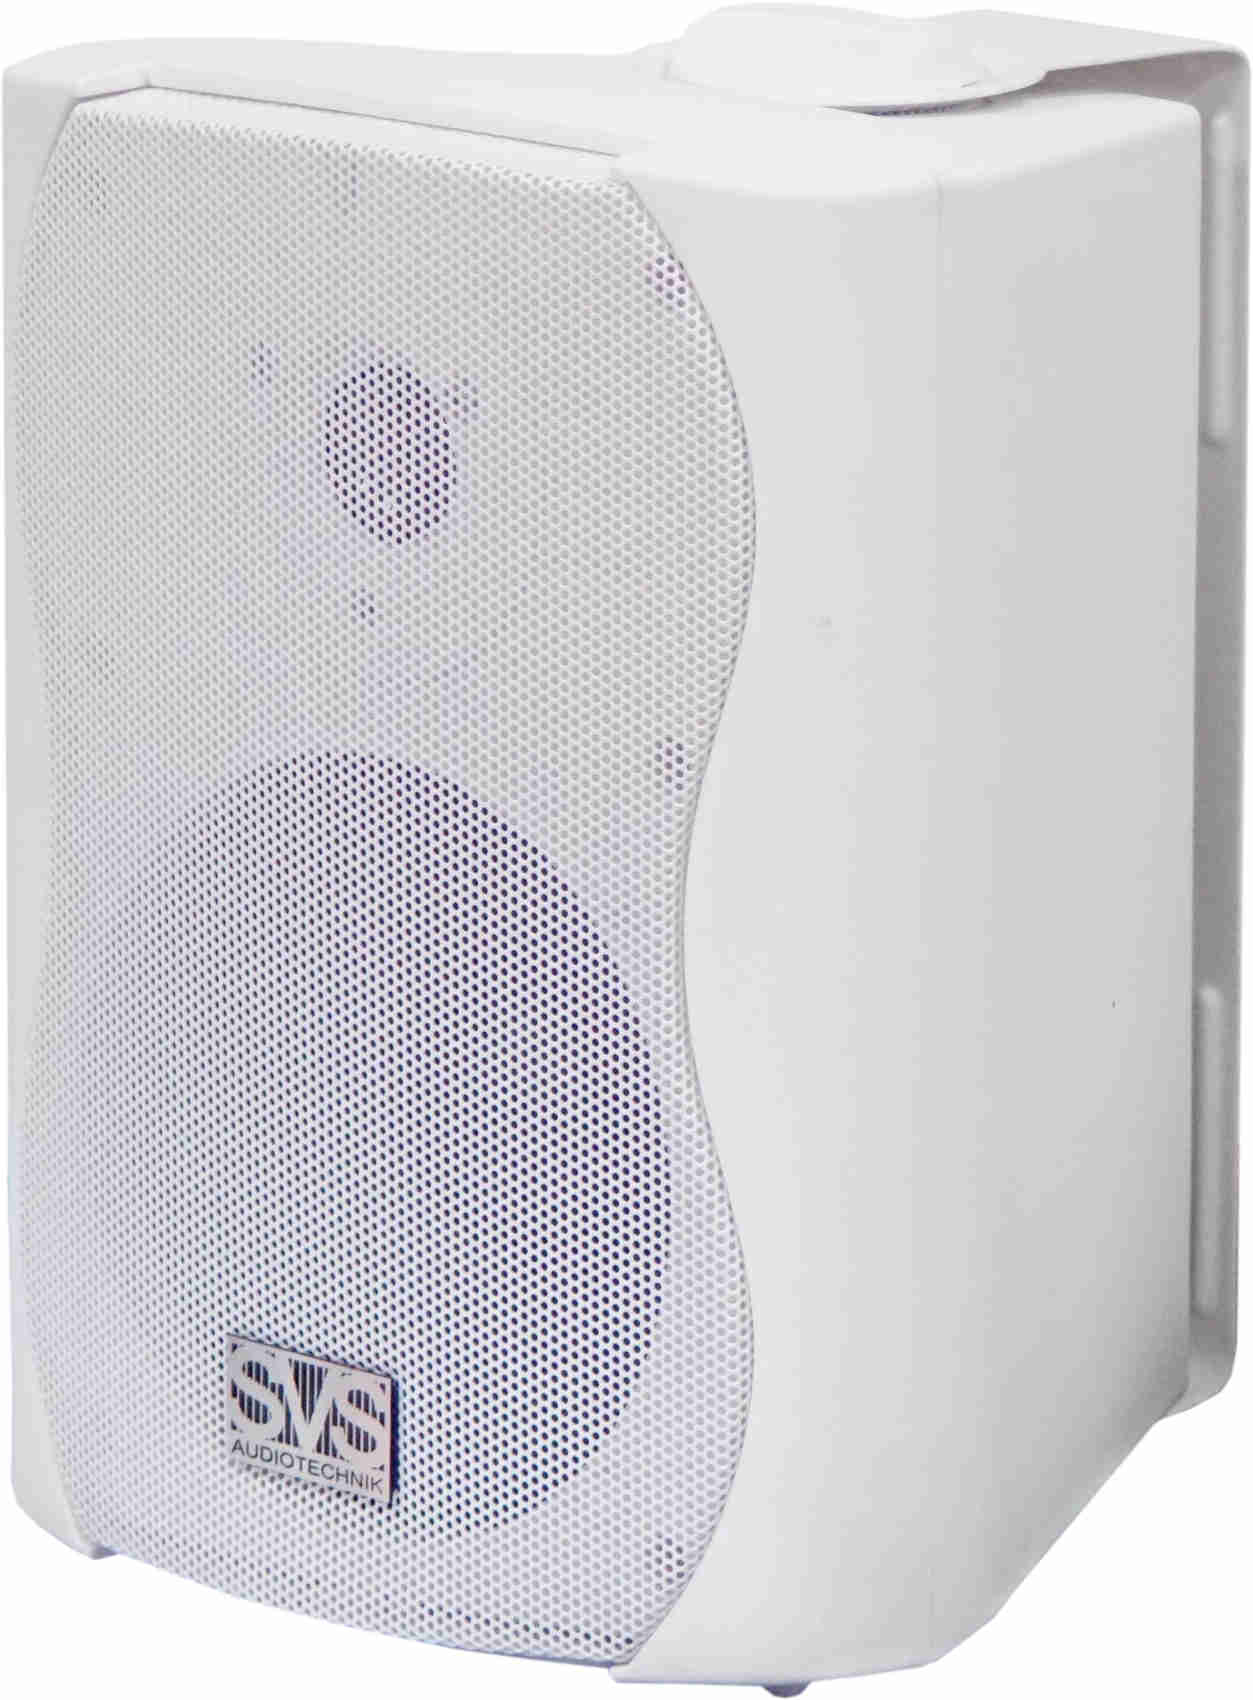 SVS Audiotechnik WS-30 White - фото 3